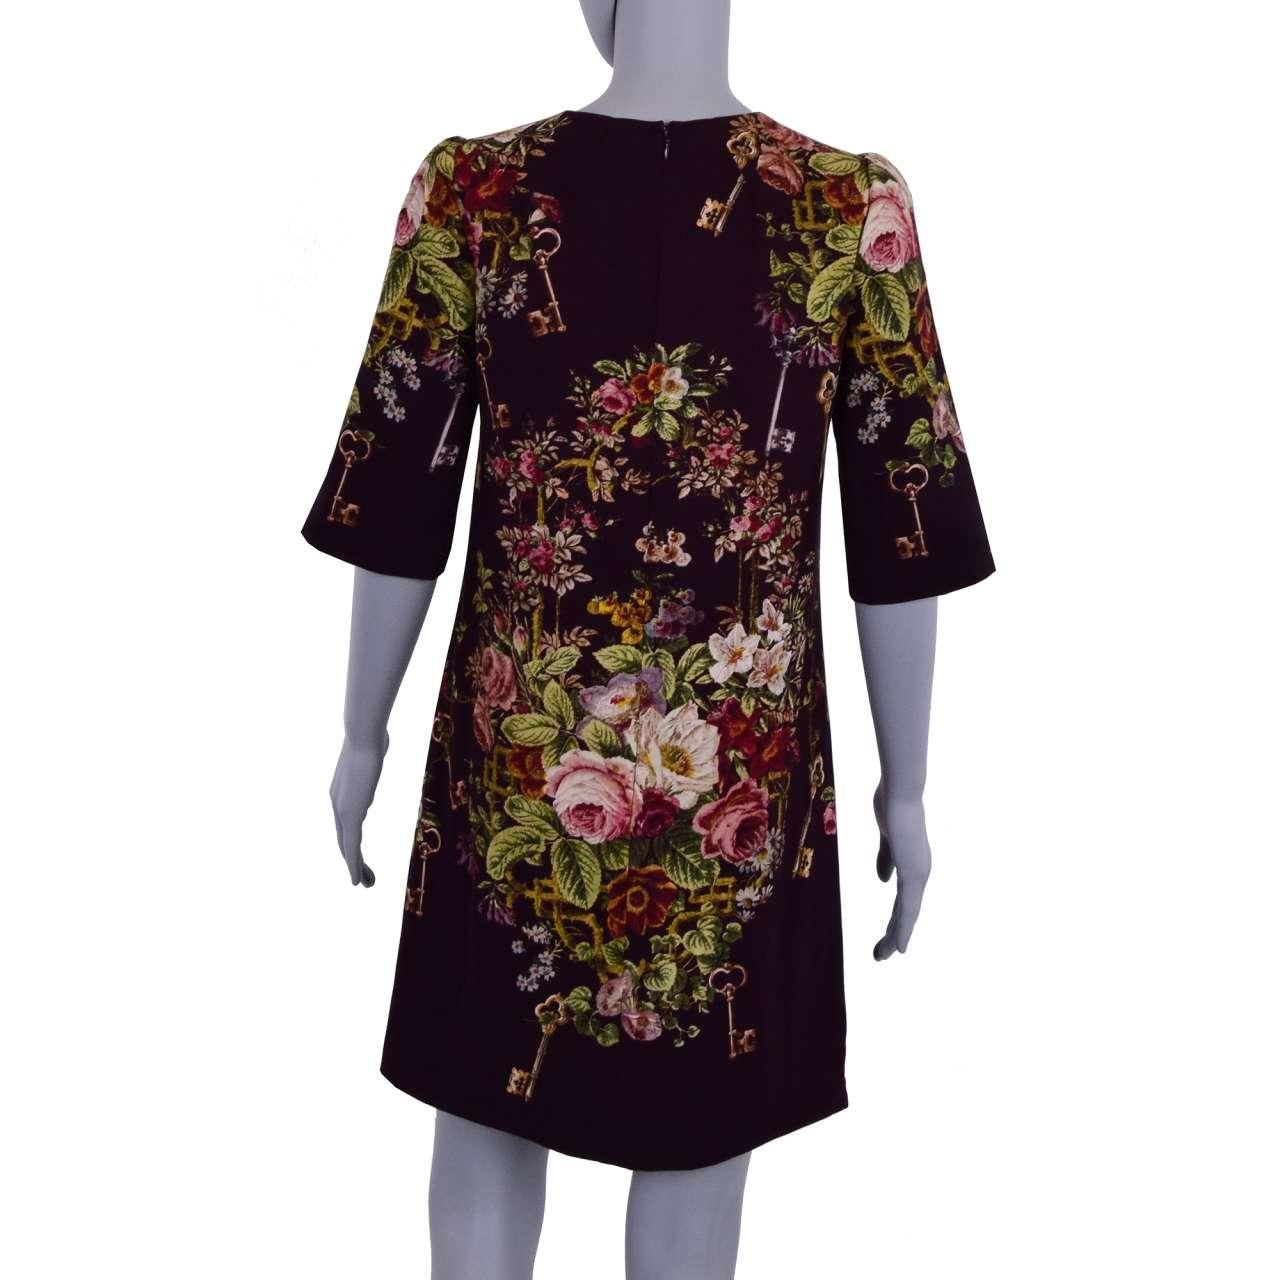 Dolce & Gabbana - Keys Roses Printed Dress Bordeaux IT 36 For Sale 2